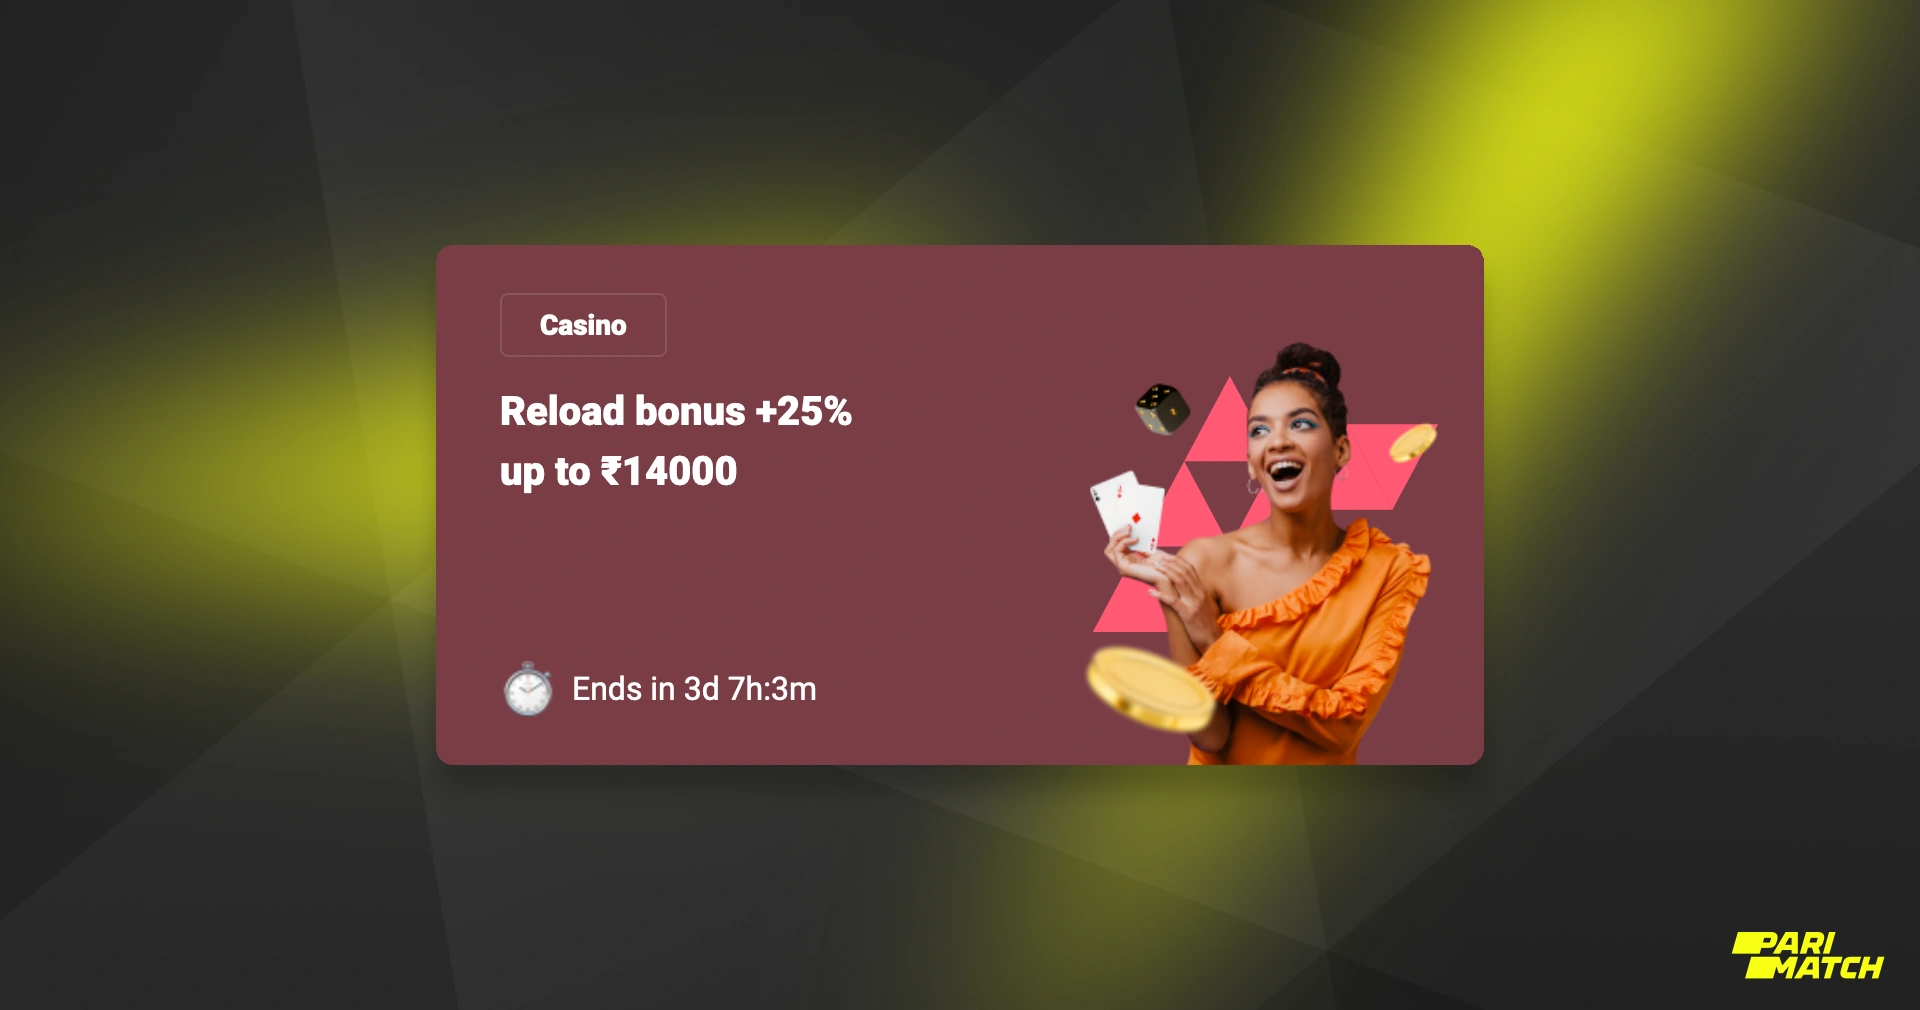 Reload bonus allows you to get an extra bonus for a deposit